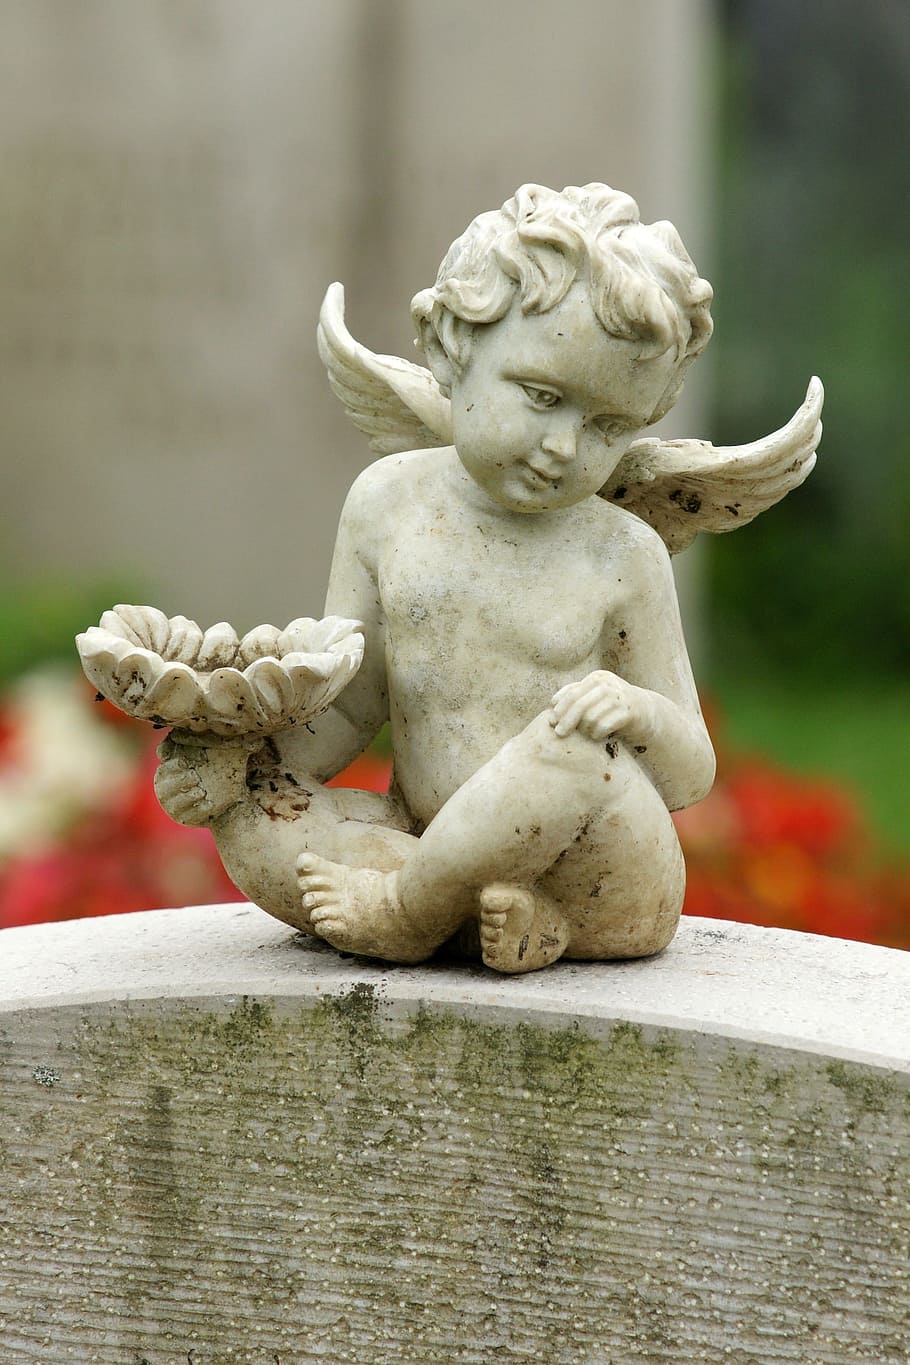 angel, sculpture, harmony, art, cemetery, faith, hope, angel figure, contemplative, guardian angel